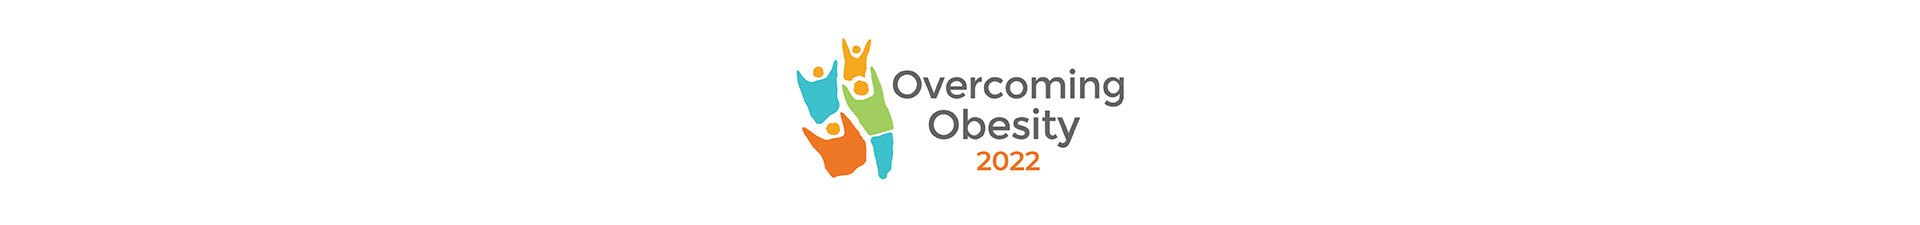 Overcoming Obesity 2022 Event Banner